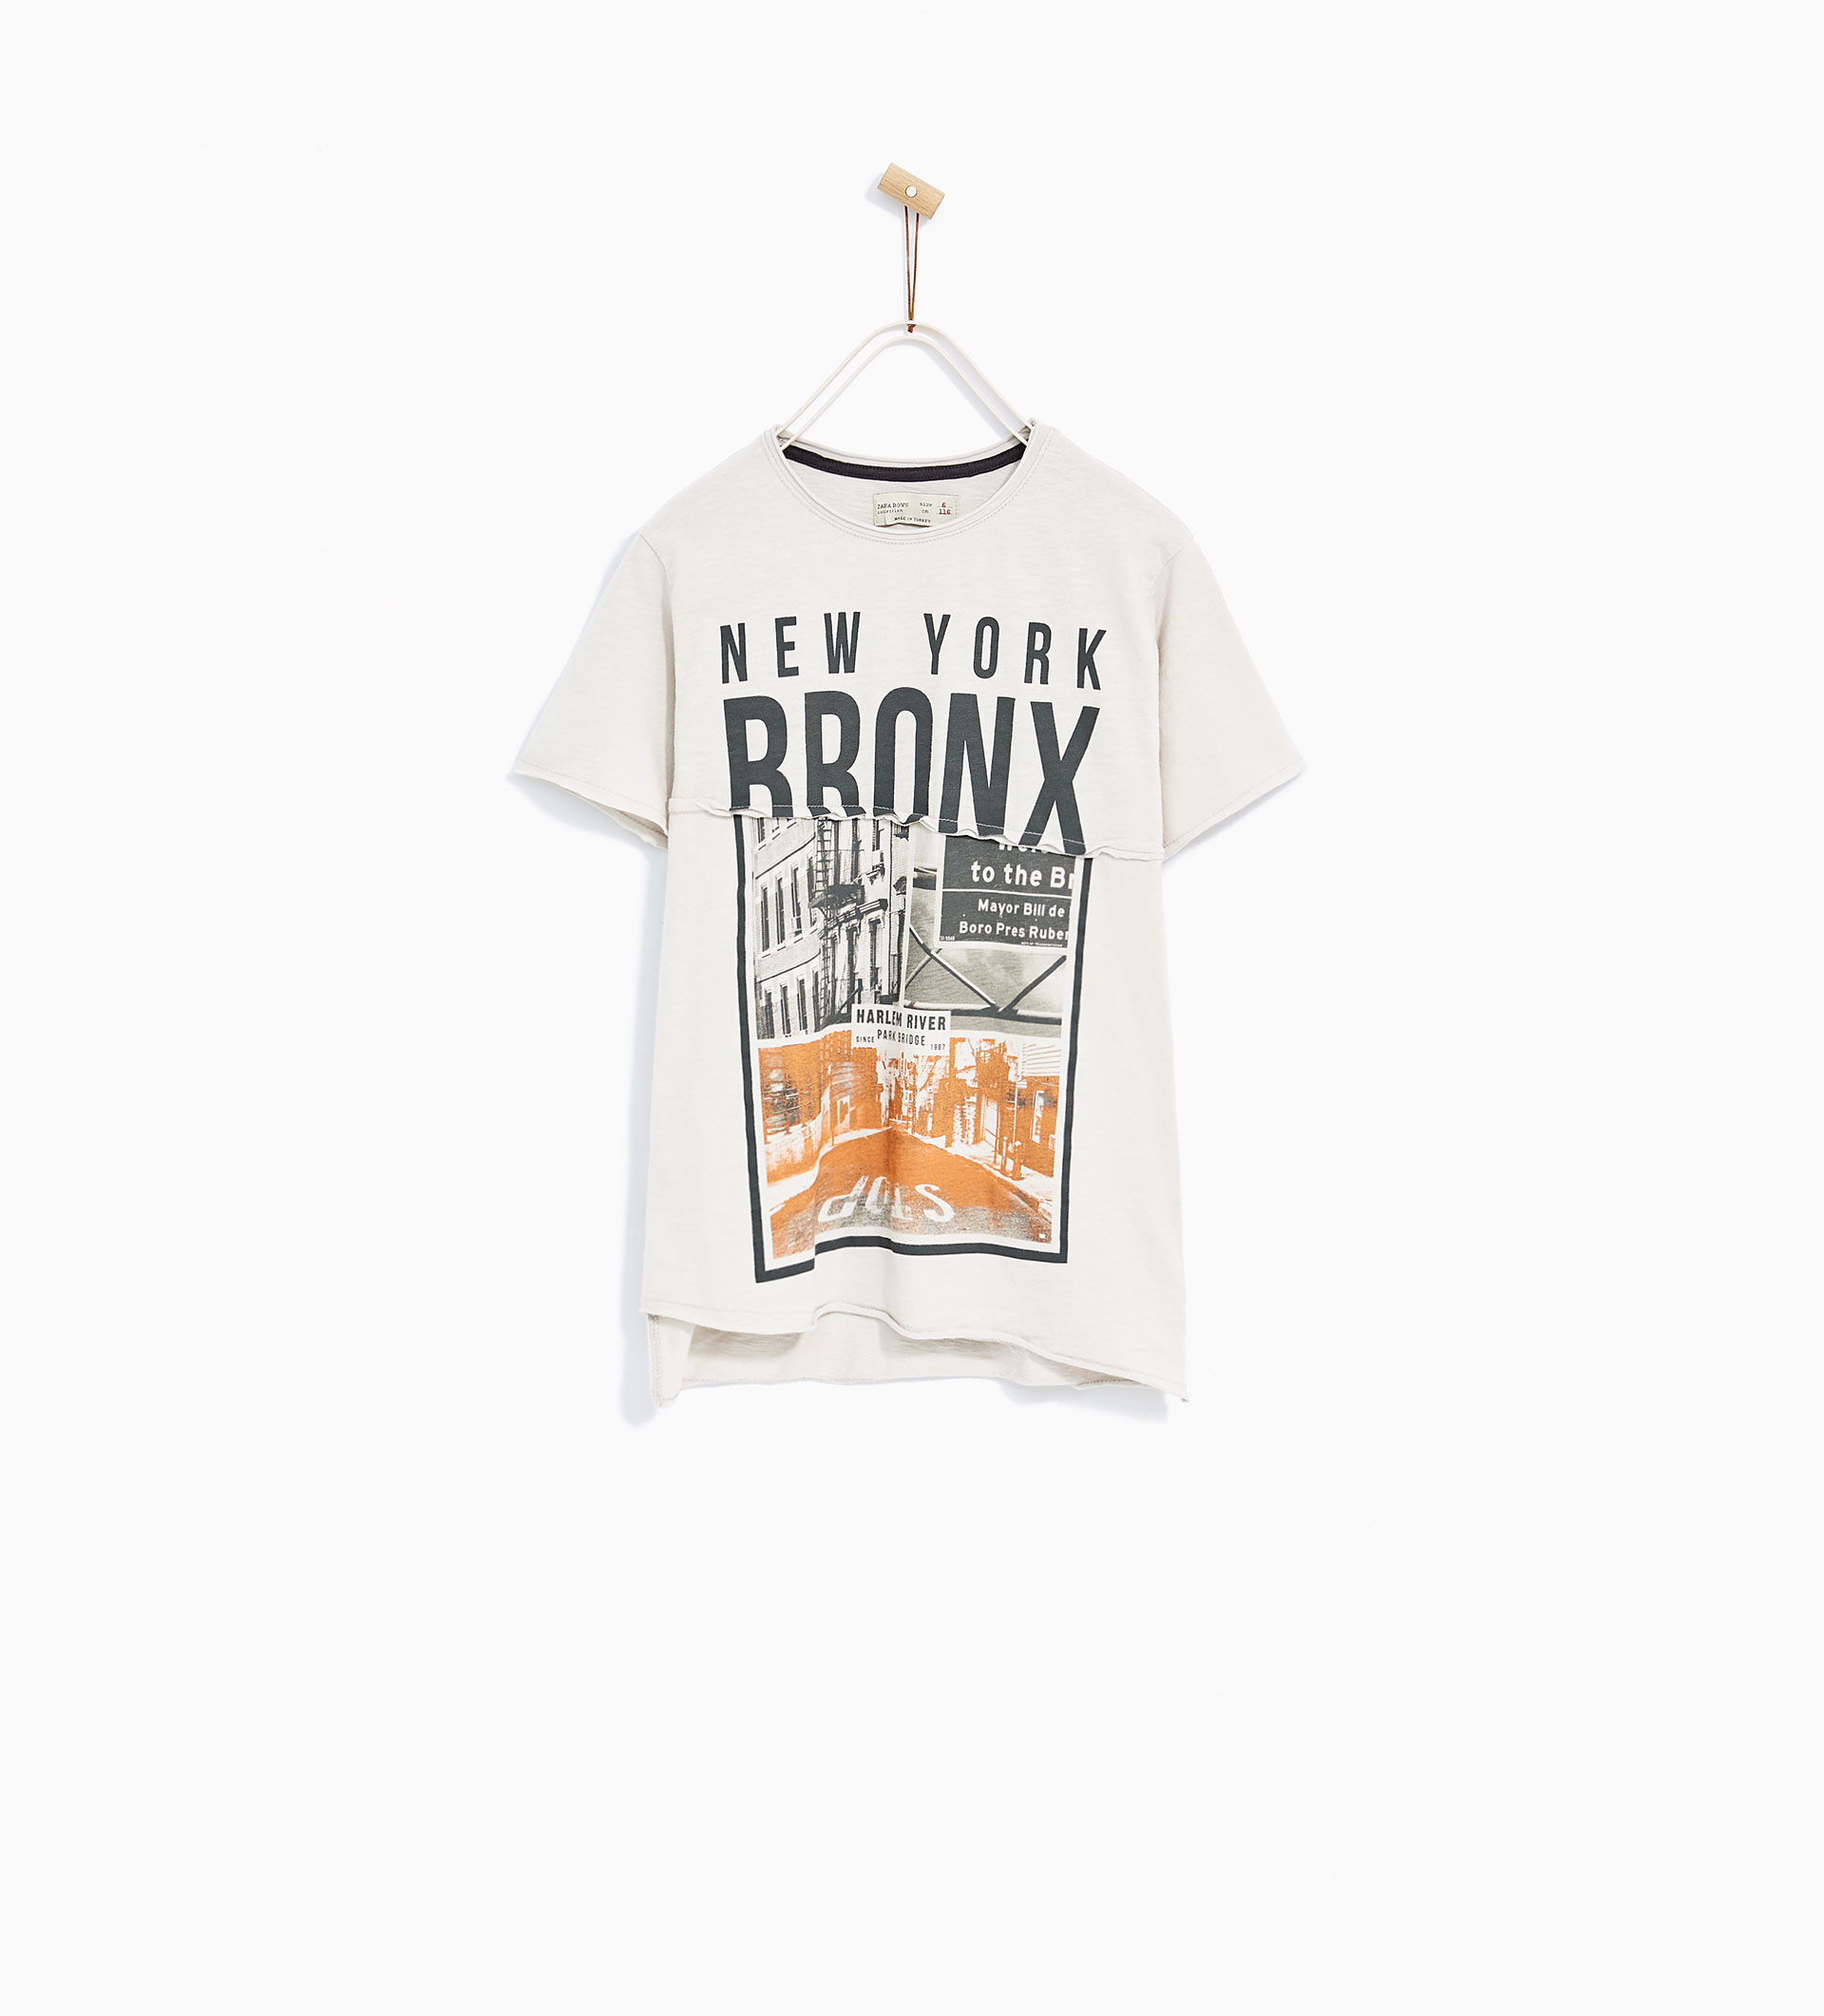 Fashion Company Zara Releases A Bronx-Themed T-Shirt